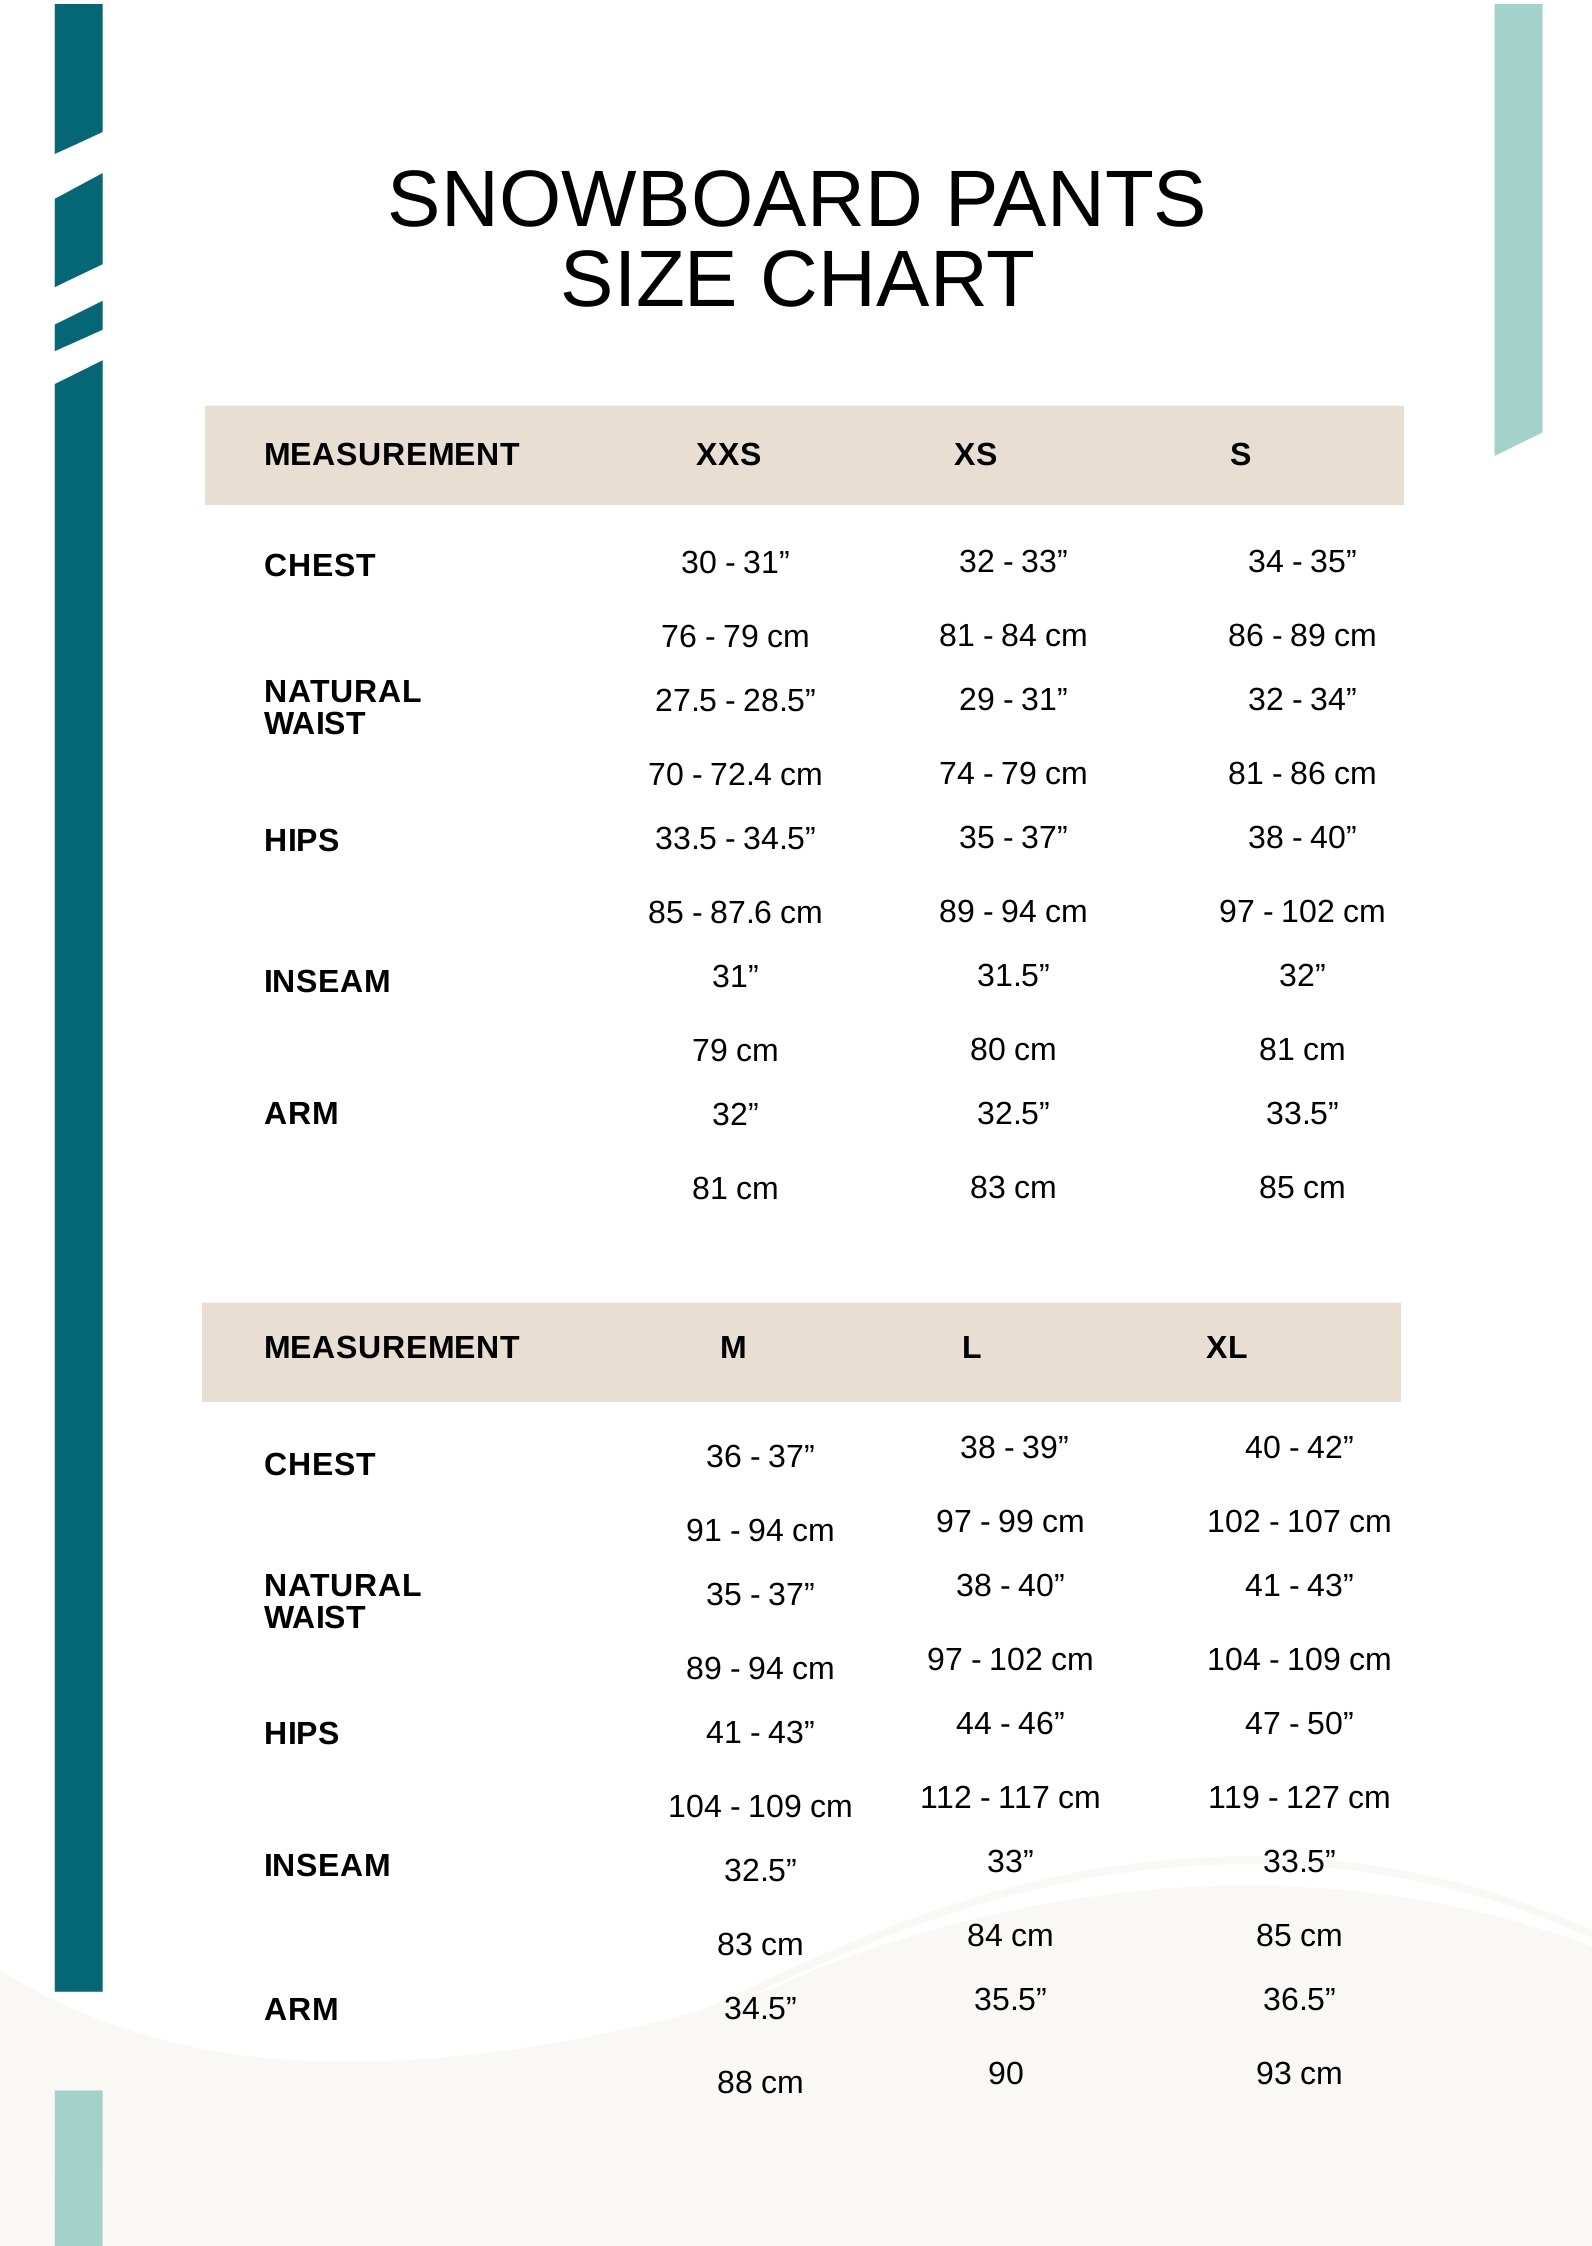 Snowboard Pants Size Chart in PDF